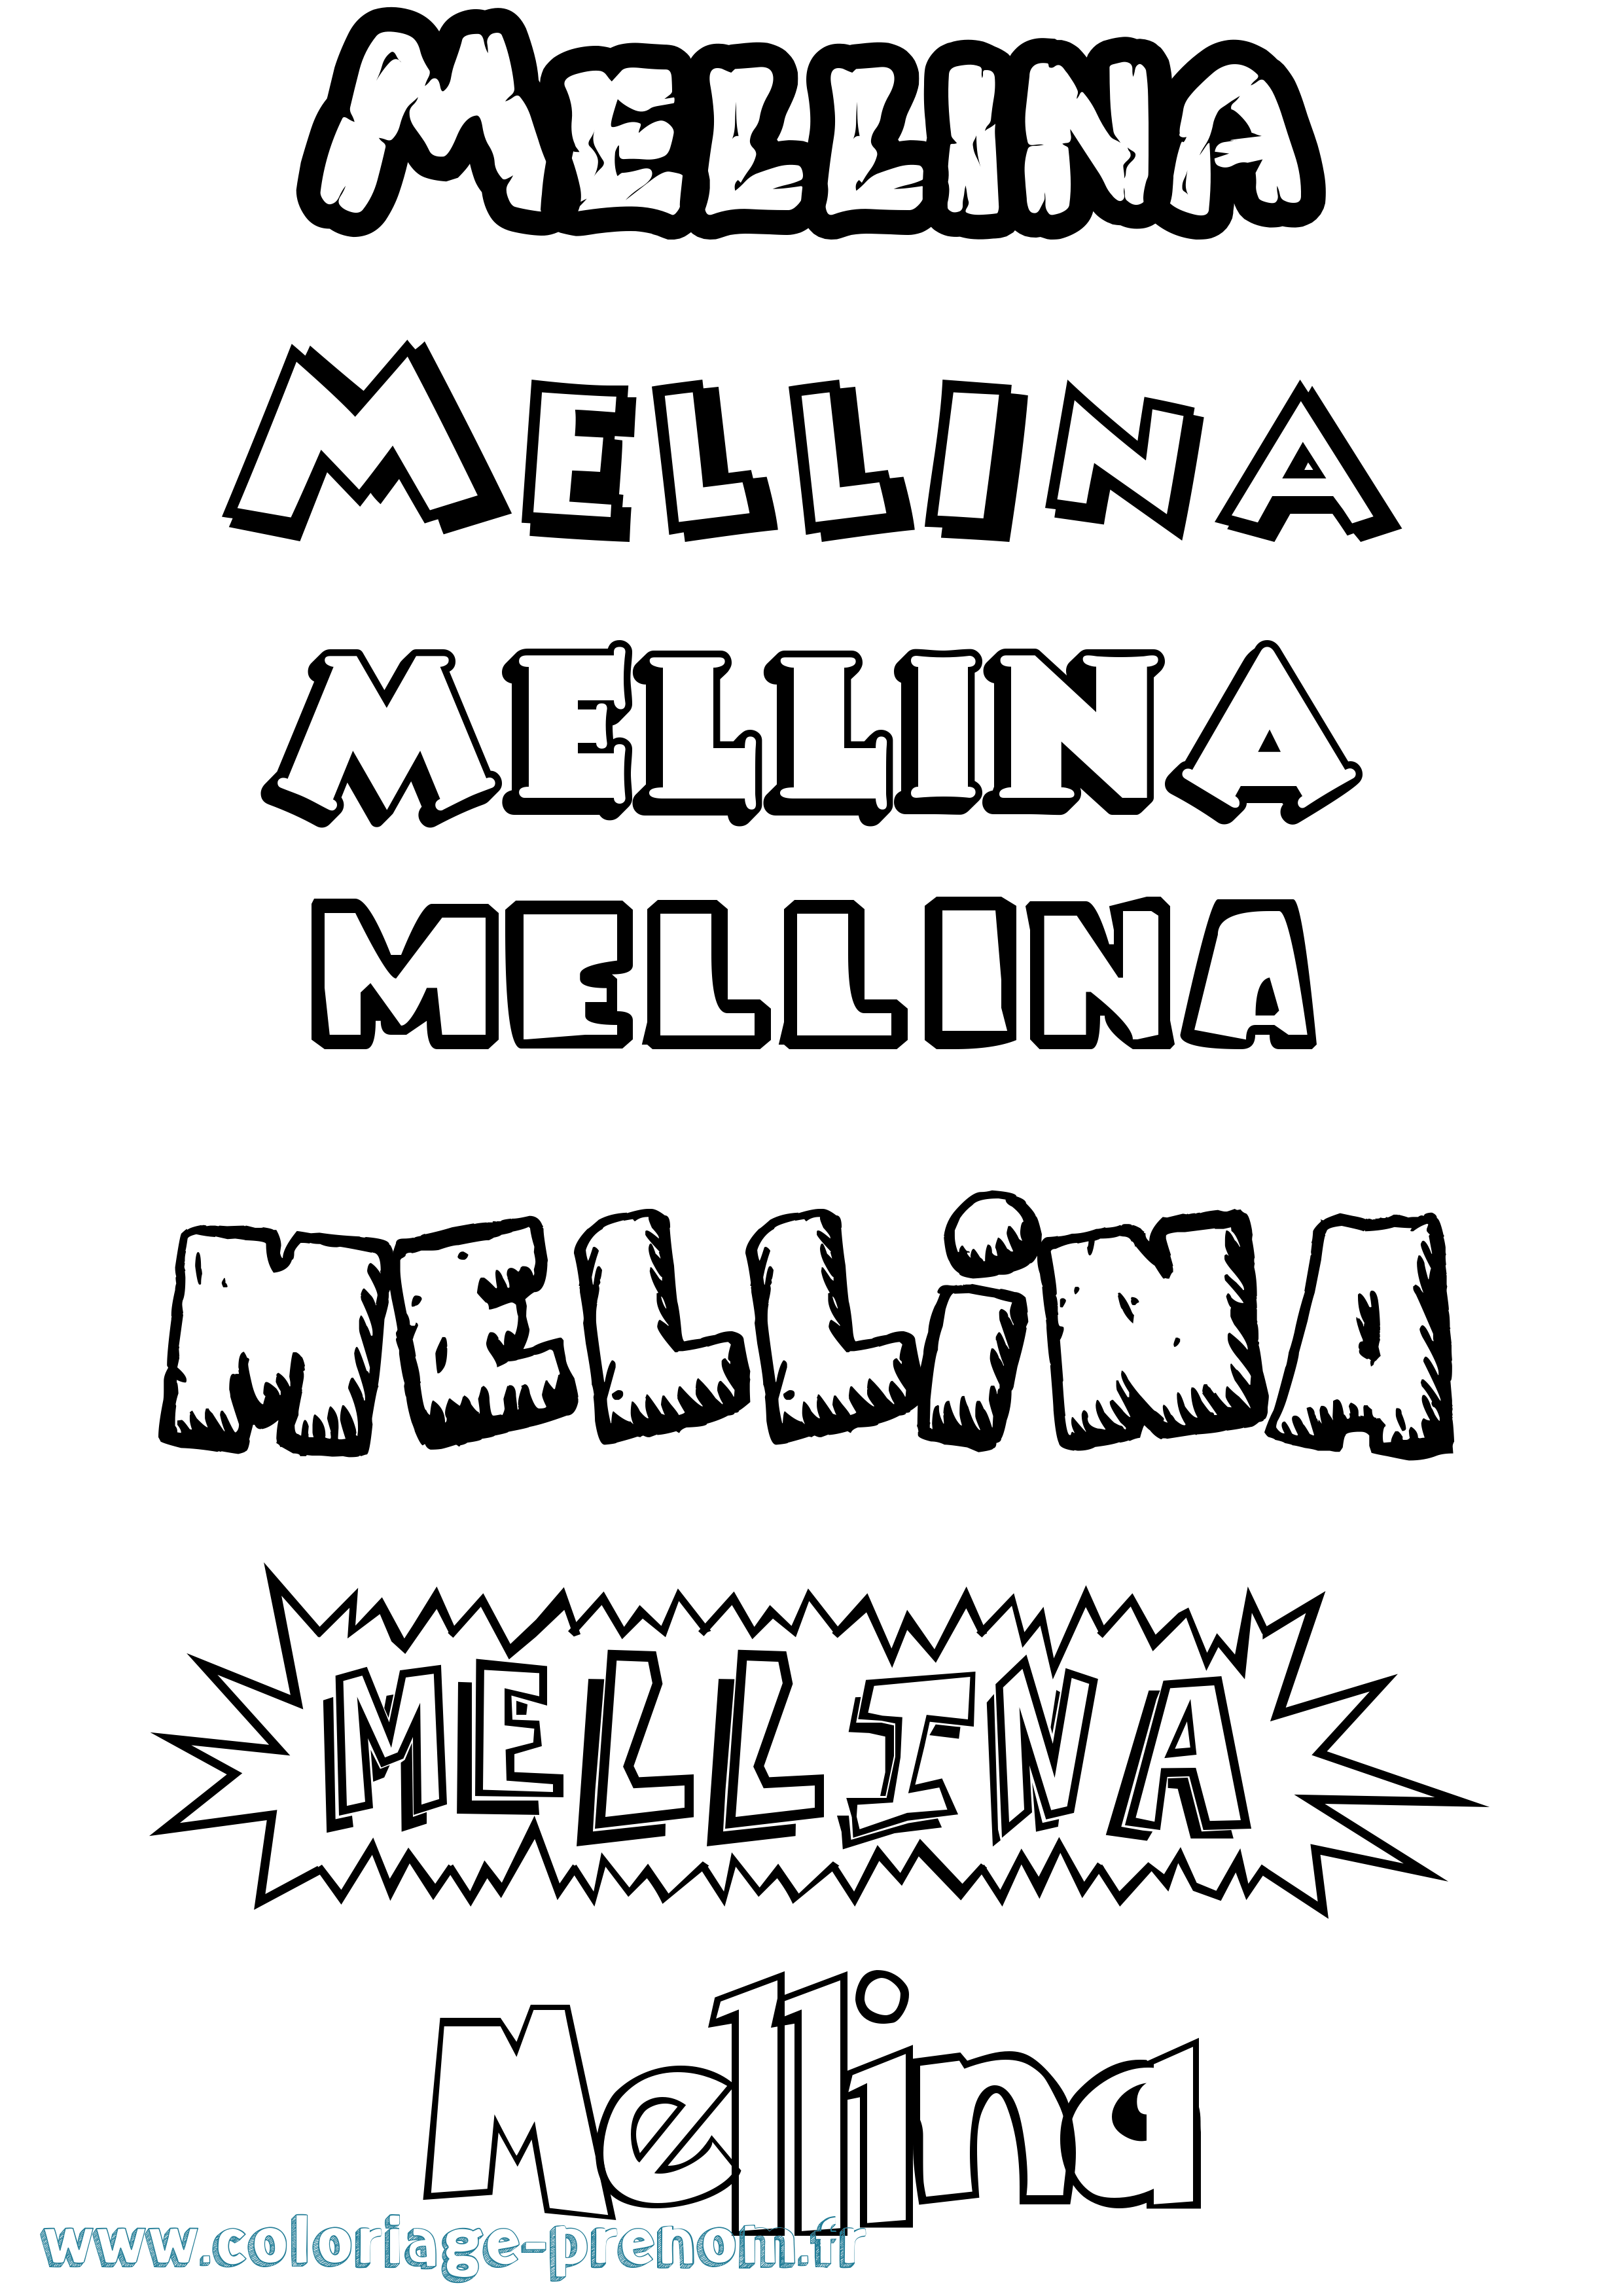 Coloriage prénom Mellina